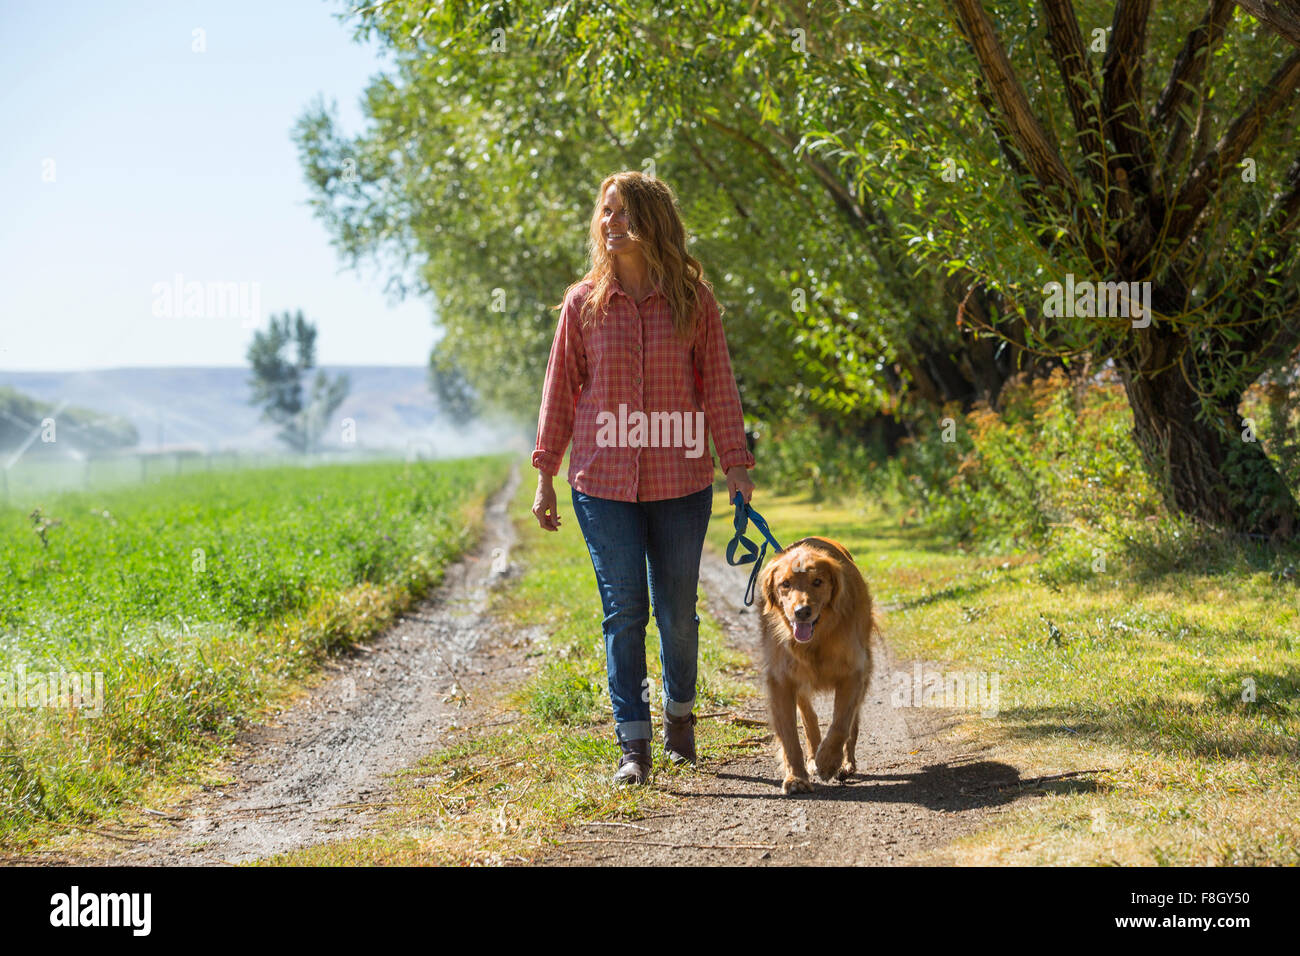 Caucasian woman walking dog on dirt path Stock Photo